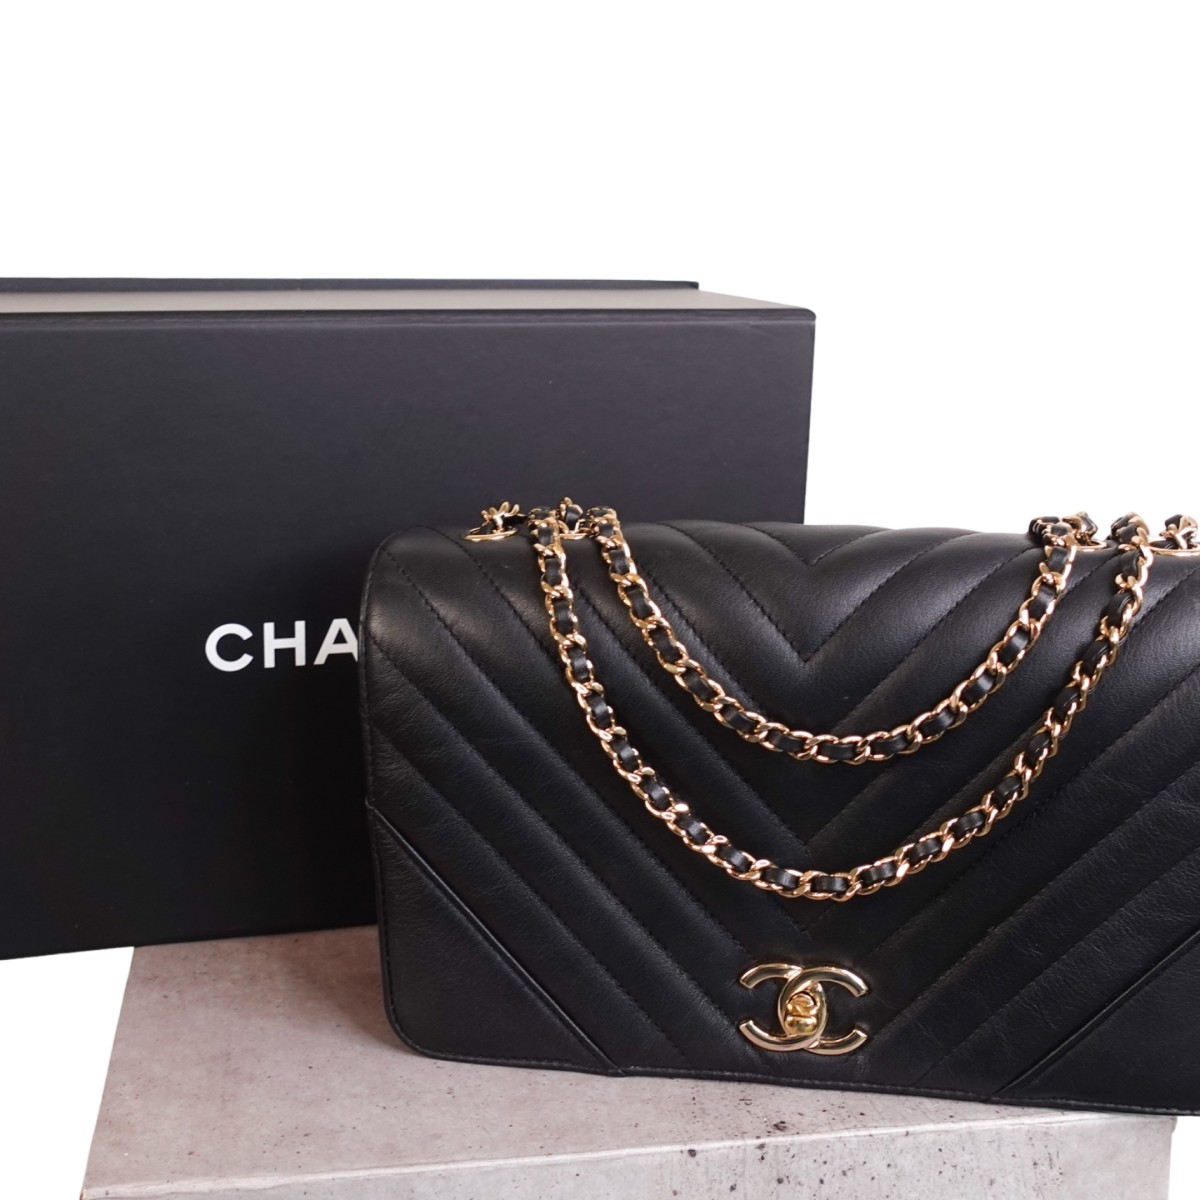 Tan Chanel Small Classic Lambskin Double Flap Shoulder Bag, GottliebpaludanShops Revival